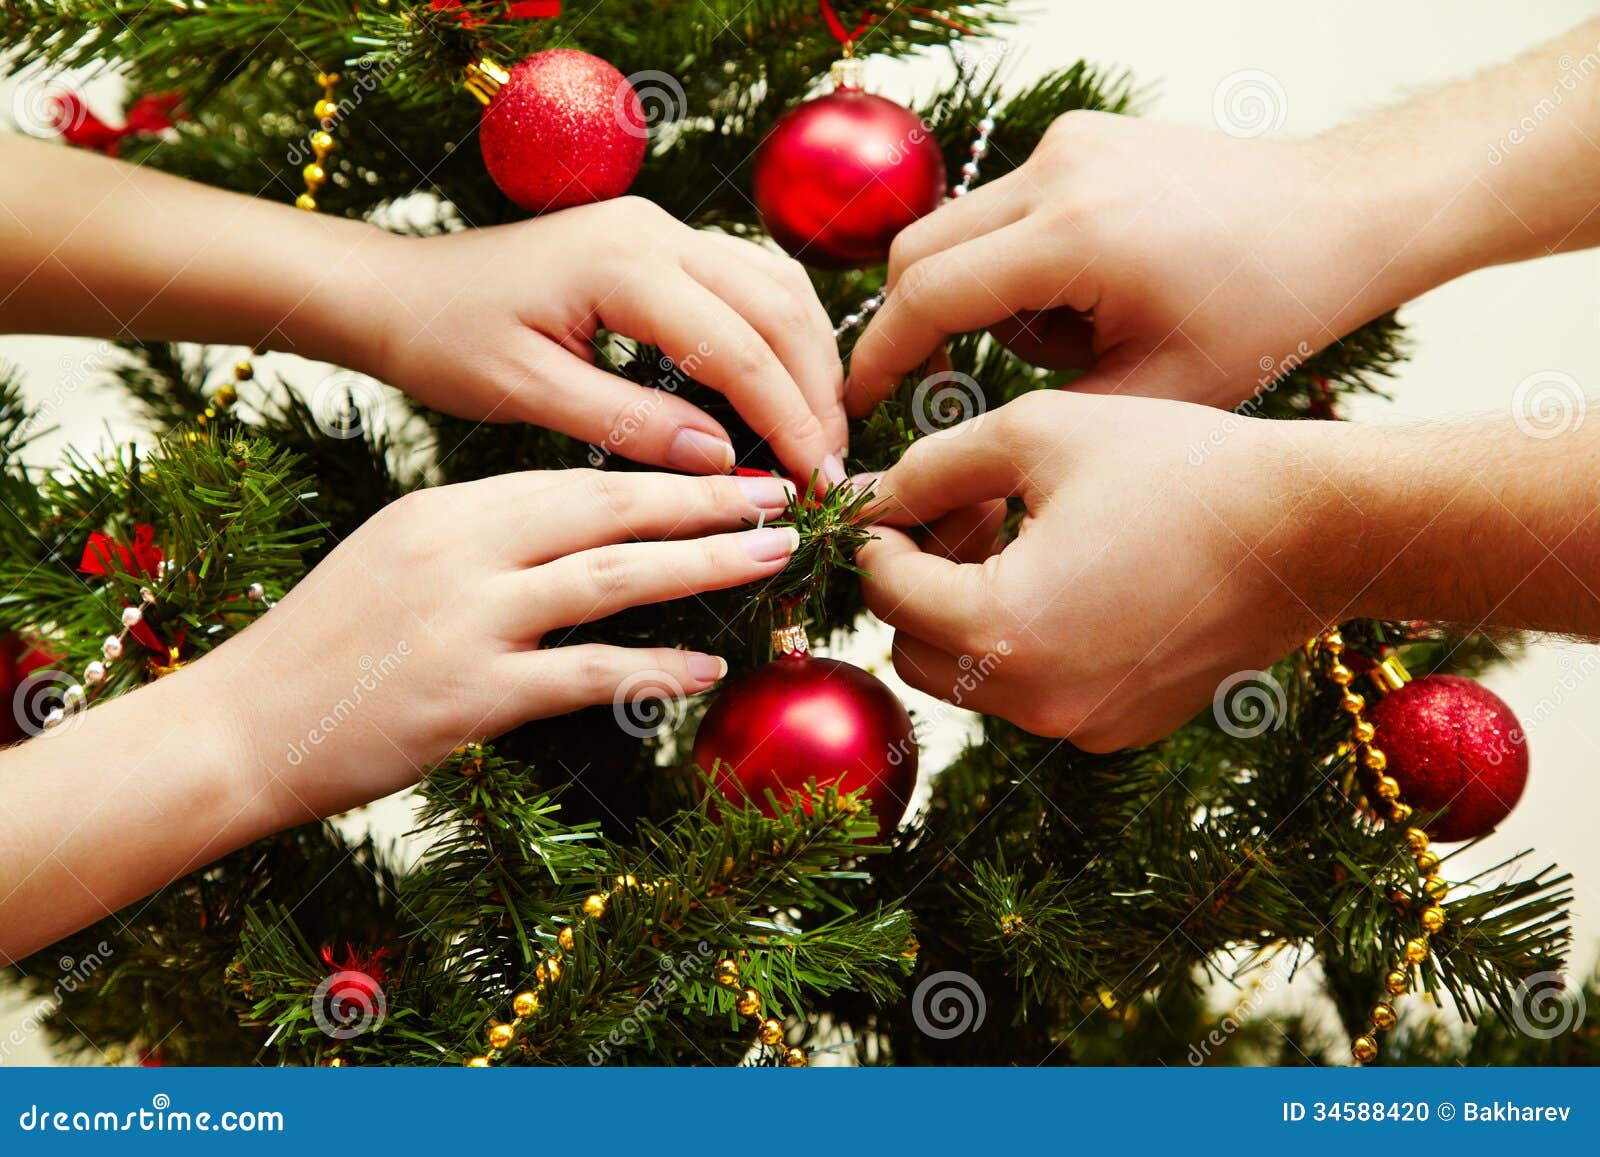 Decorating The Christmas Tree Stock Photo Image Of